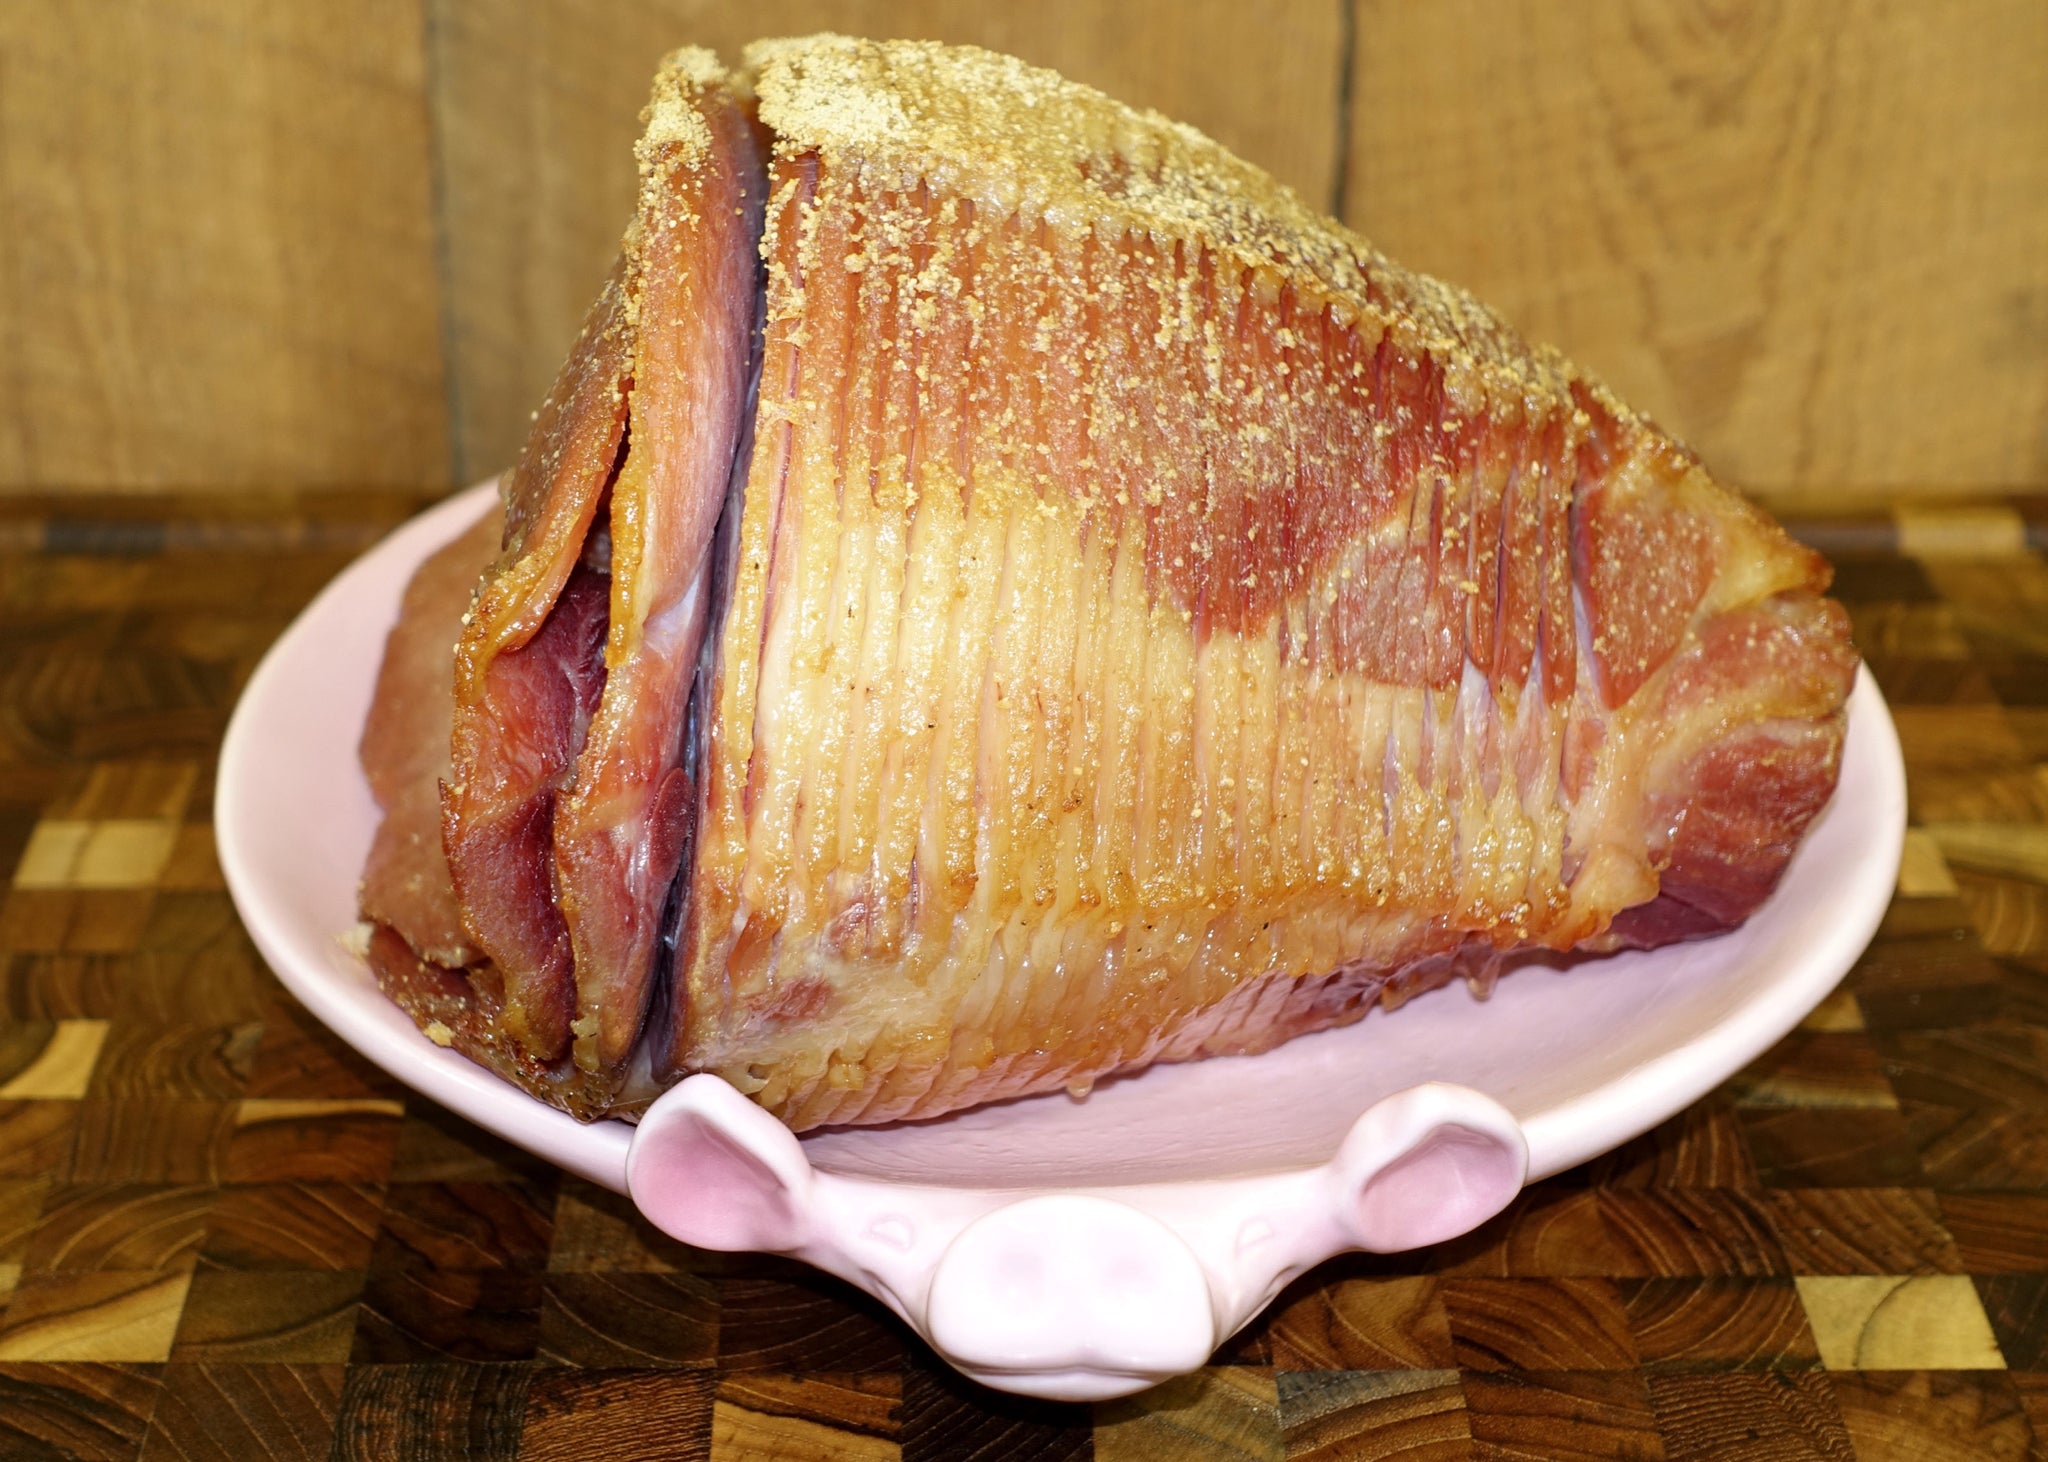 cooks spiral sliced ham shoprite